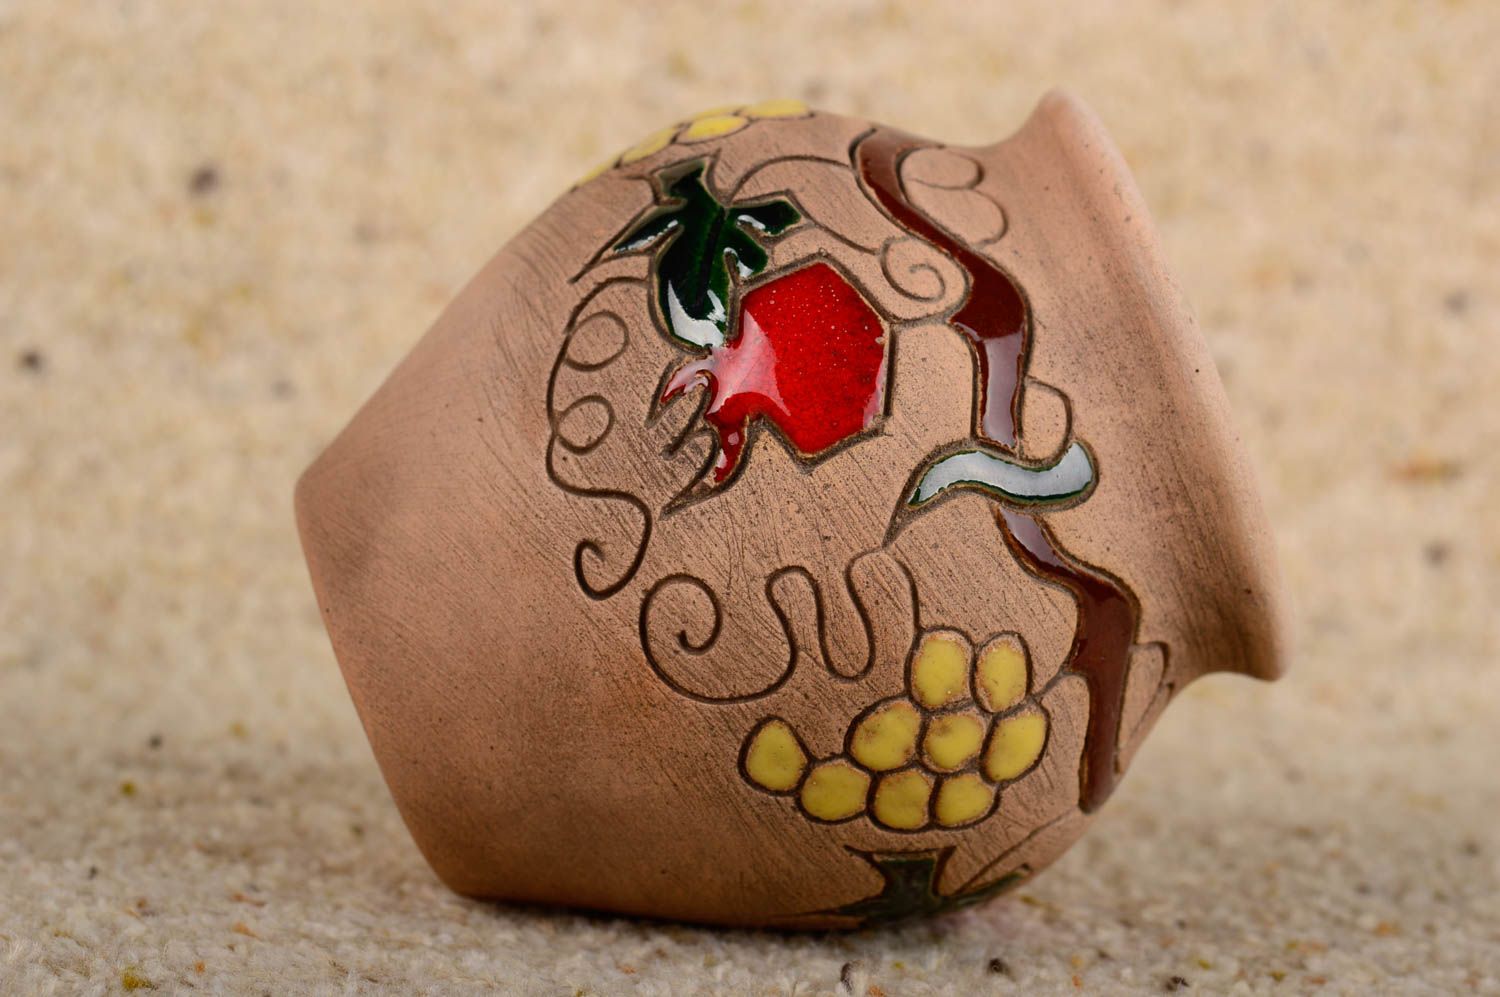 10 oz ceramic wine pitcher pot with handmade ornament 0,35 lb photo 2